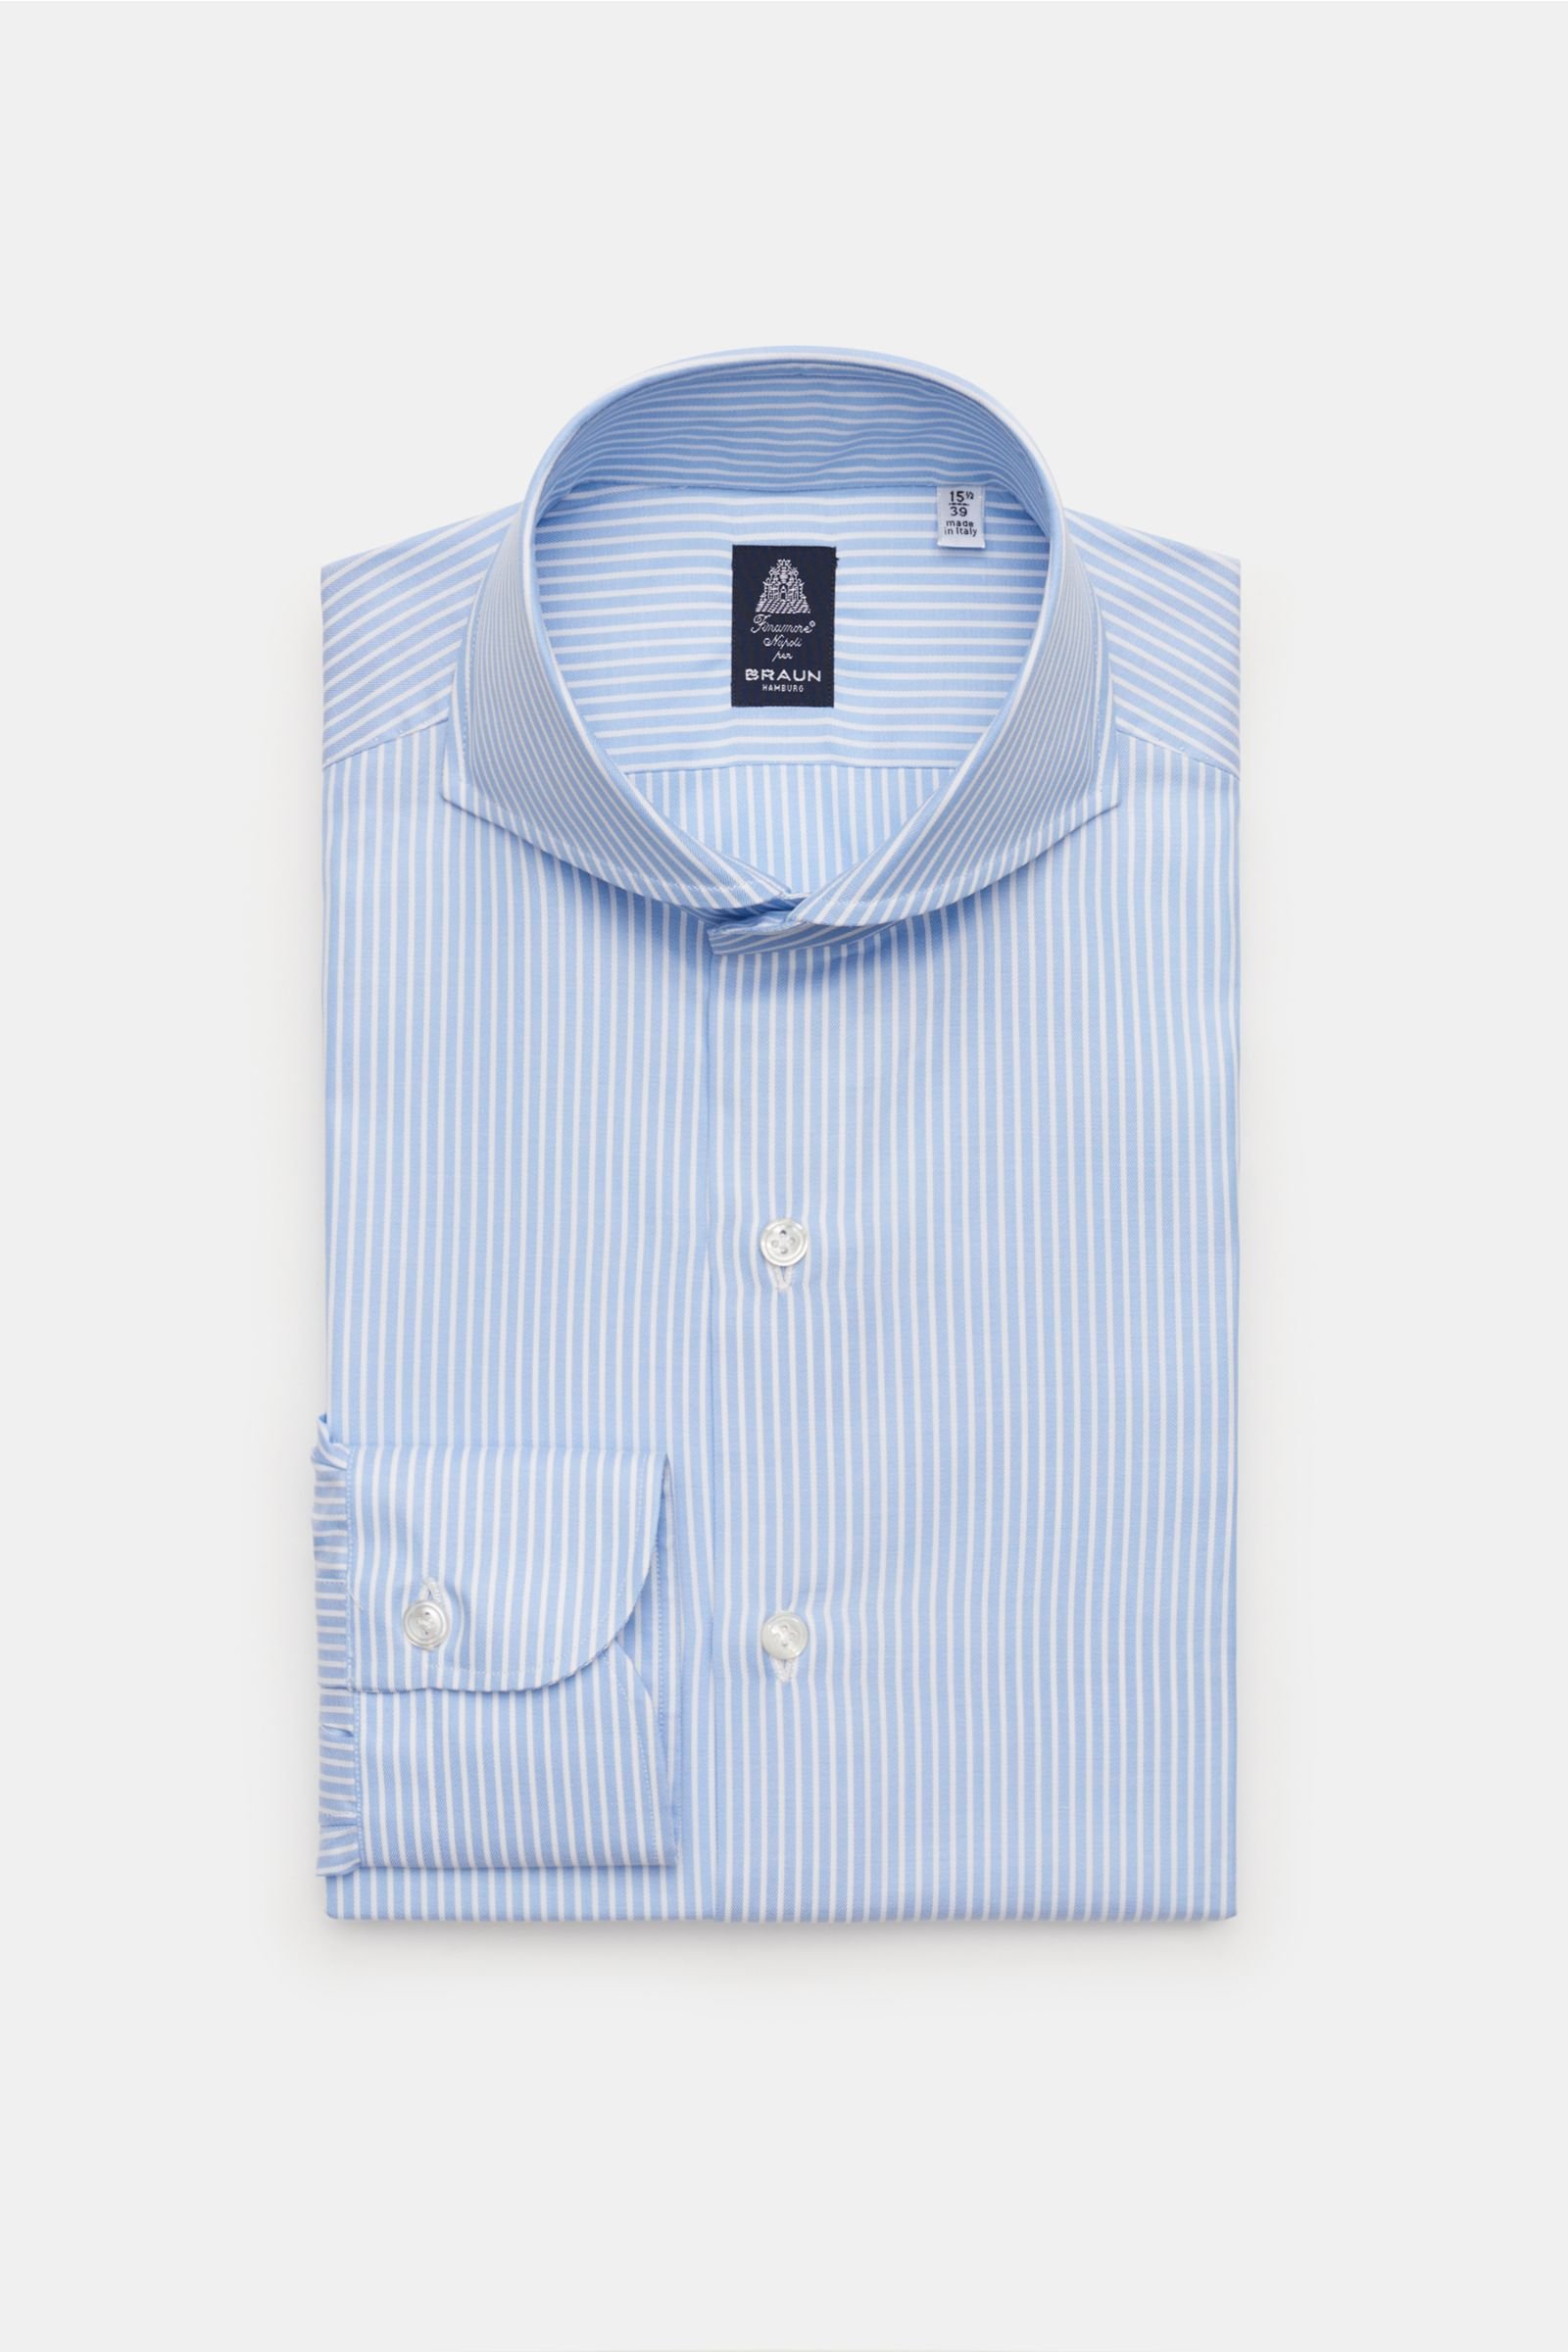 Business shirt 'Sergio Napoli' shark collar light blue/white striped 